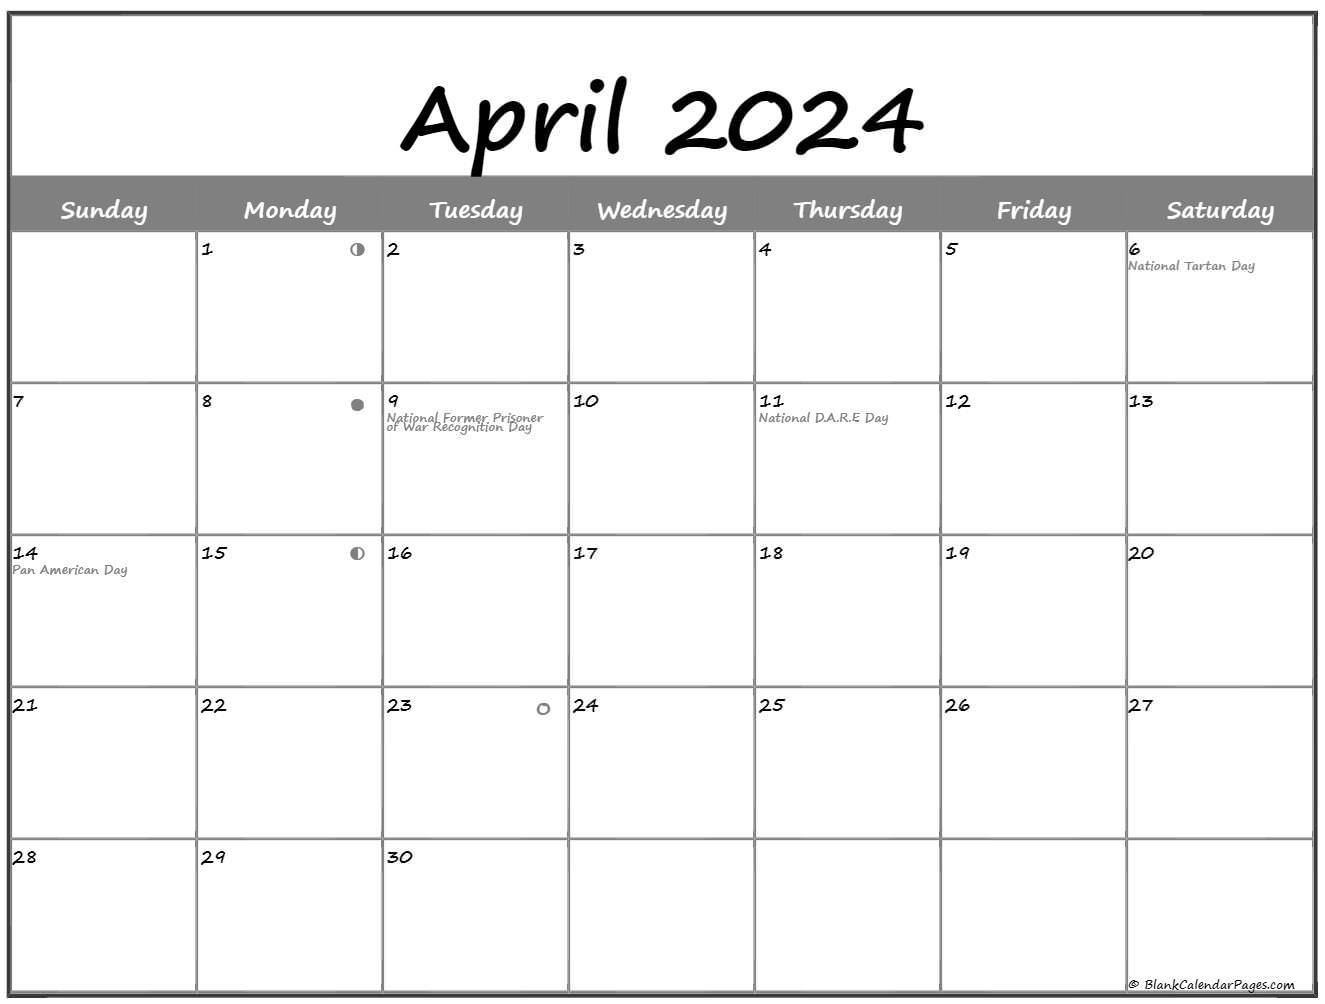 April 2021 Lunar Calendar | Moon Phase Calendar